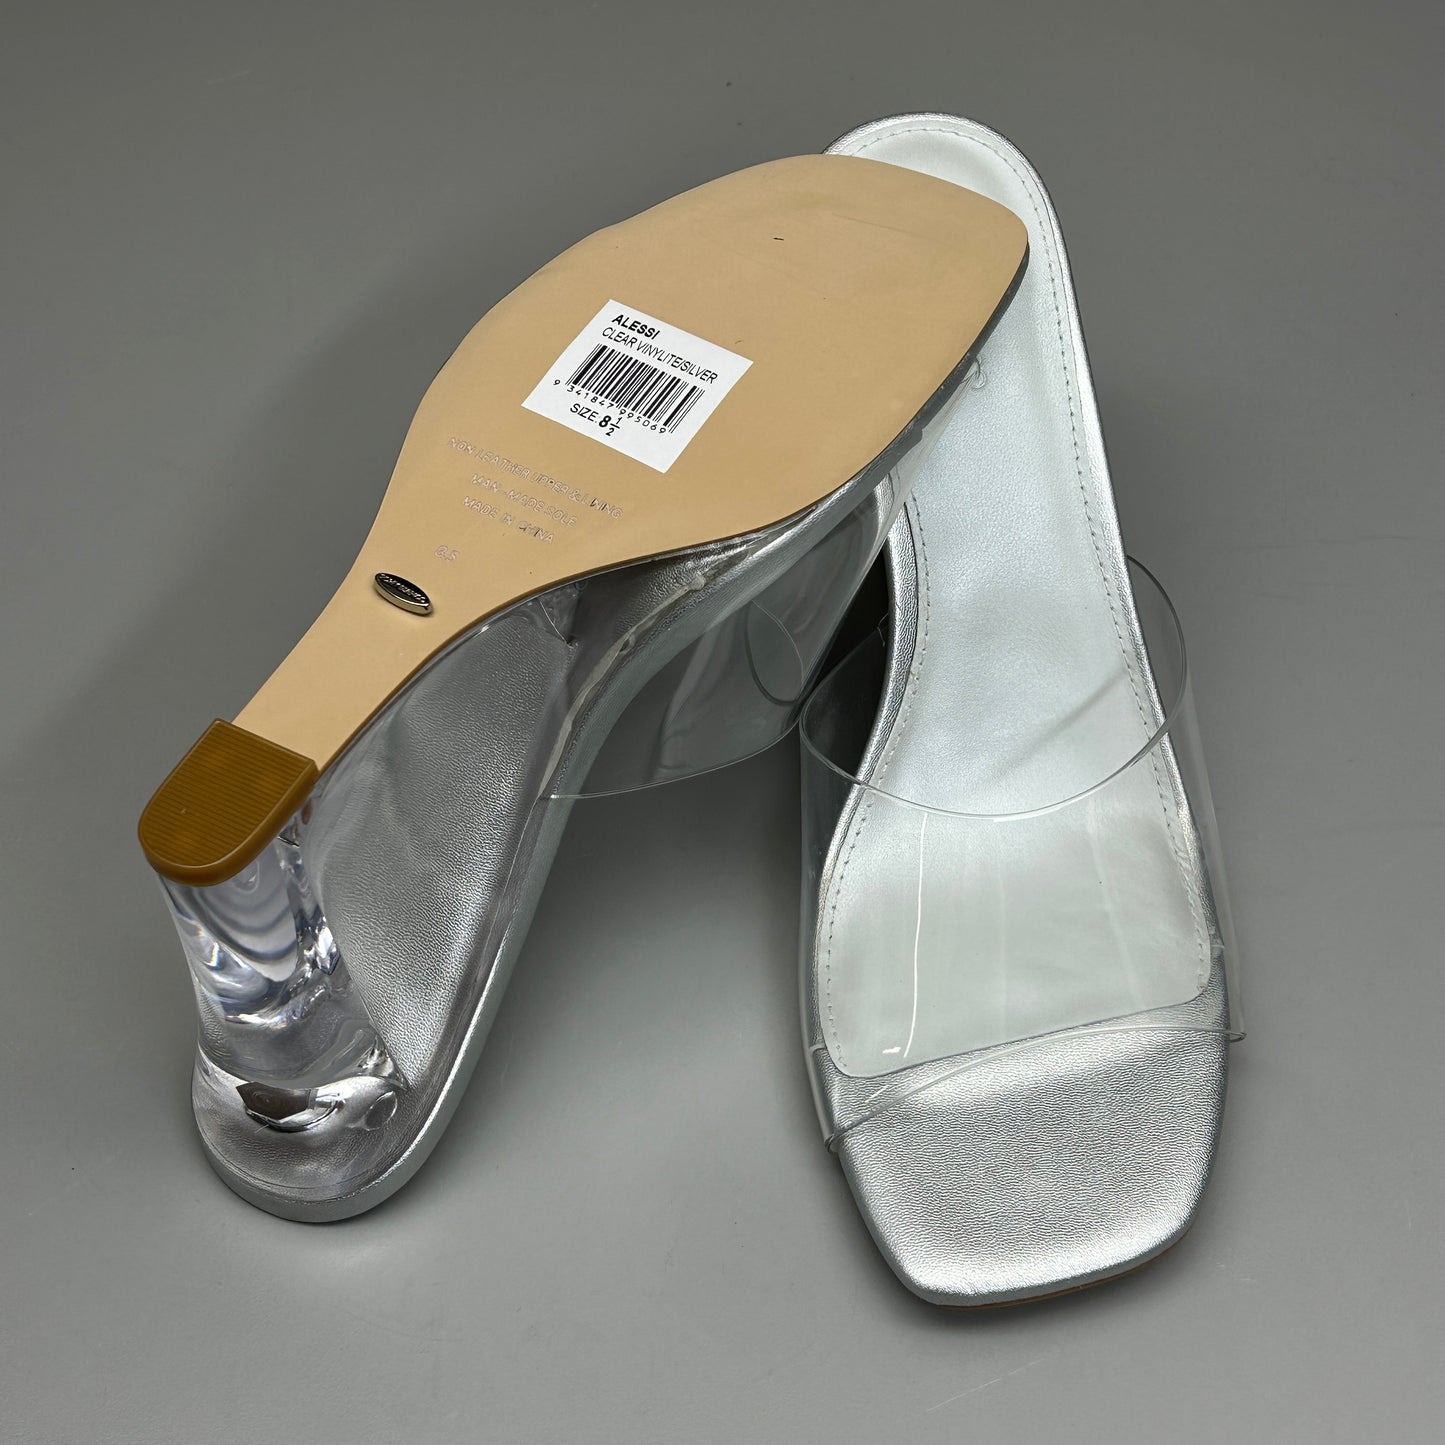 TONY BIANCO Alessi Clear Vinylite/Silver Wedges Women's Heels Sz 8.5 (New)